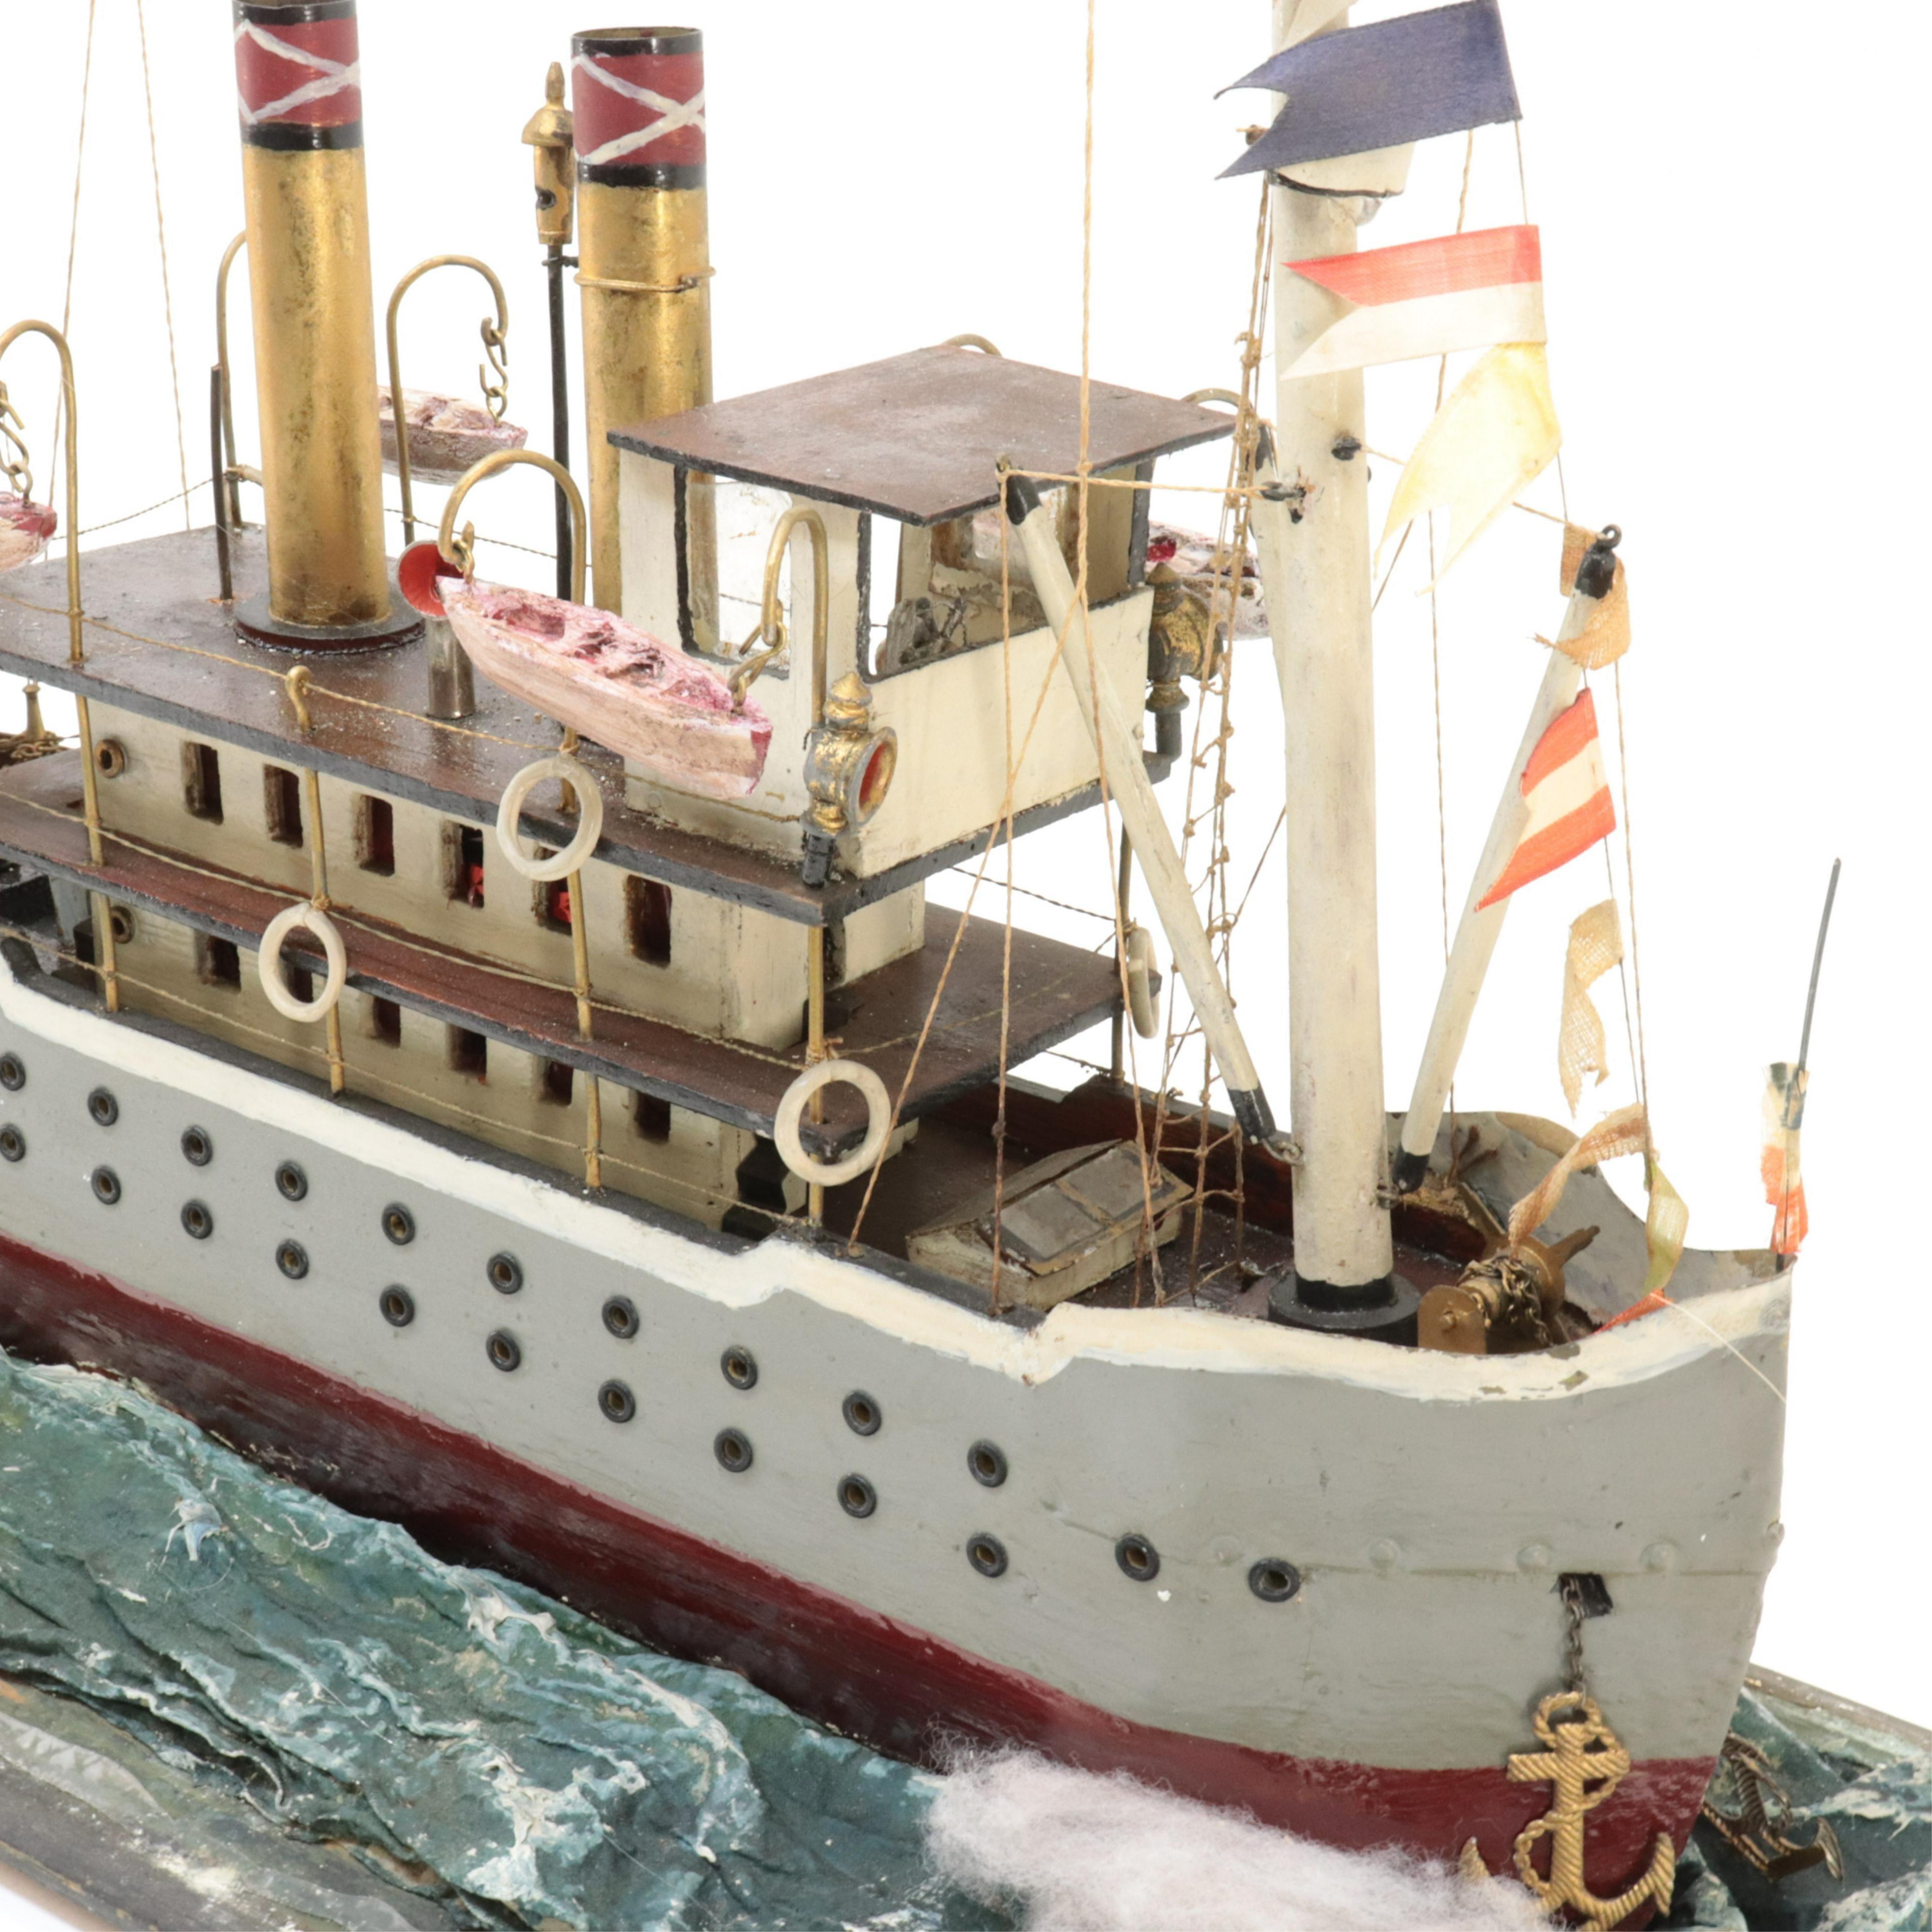 A French folk-art steamship model 